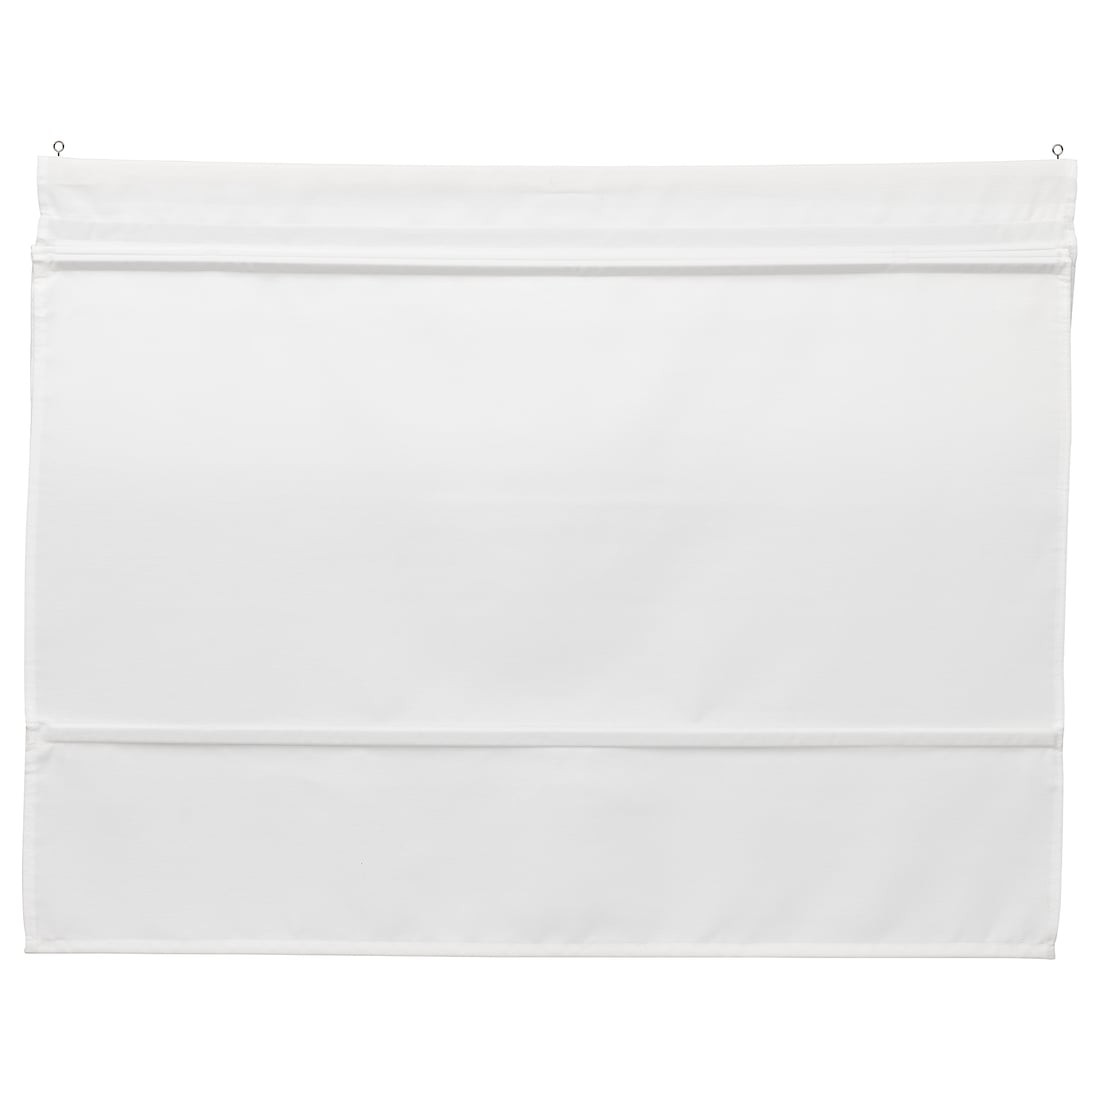 IKEA RINGBLOMMA РИНГБЛУММА Римская штора, белый, 100x160 см 30290611 302.906.11